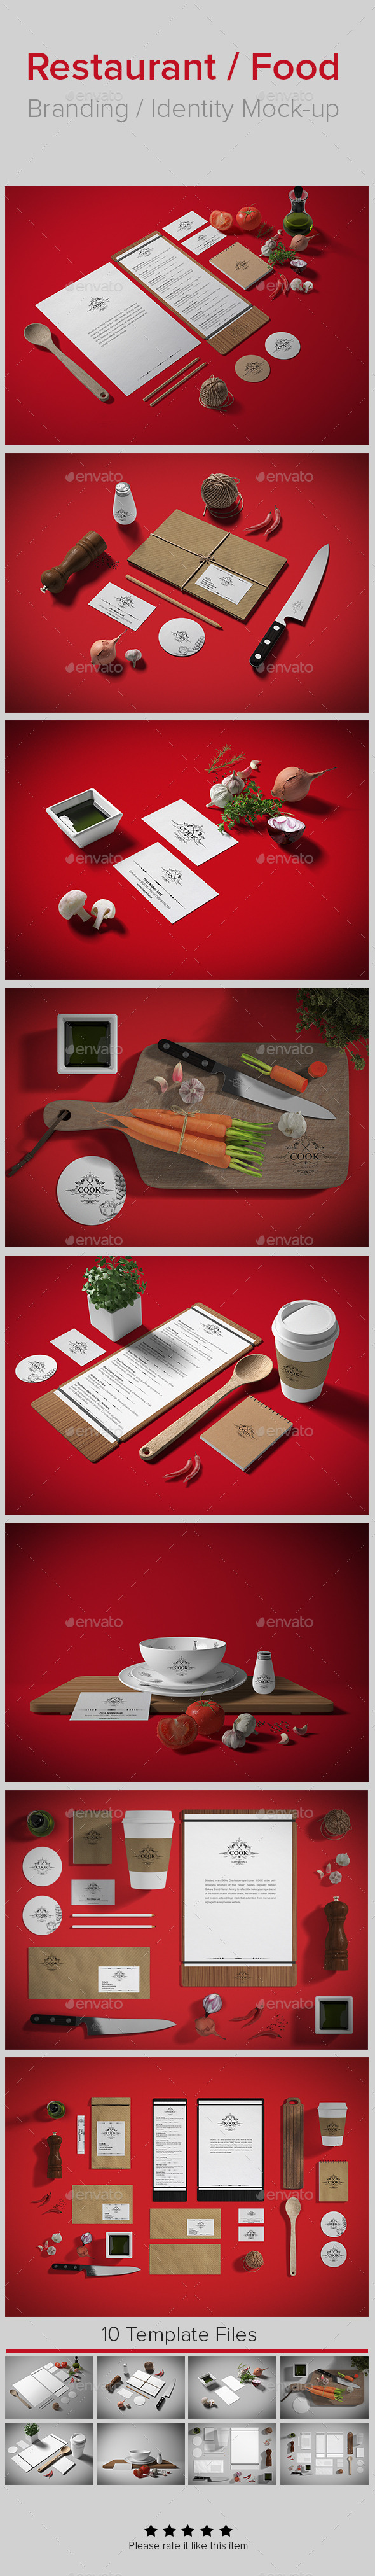 Restaurant / Food Branding Identity Mock-up by Pixelland_ | GraphicRiver